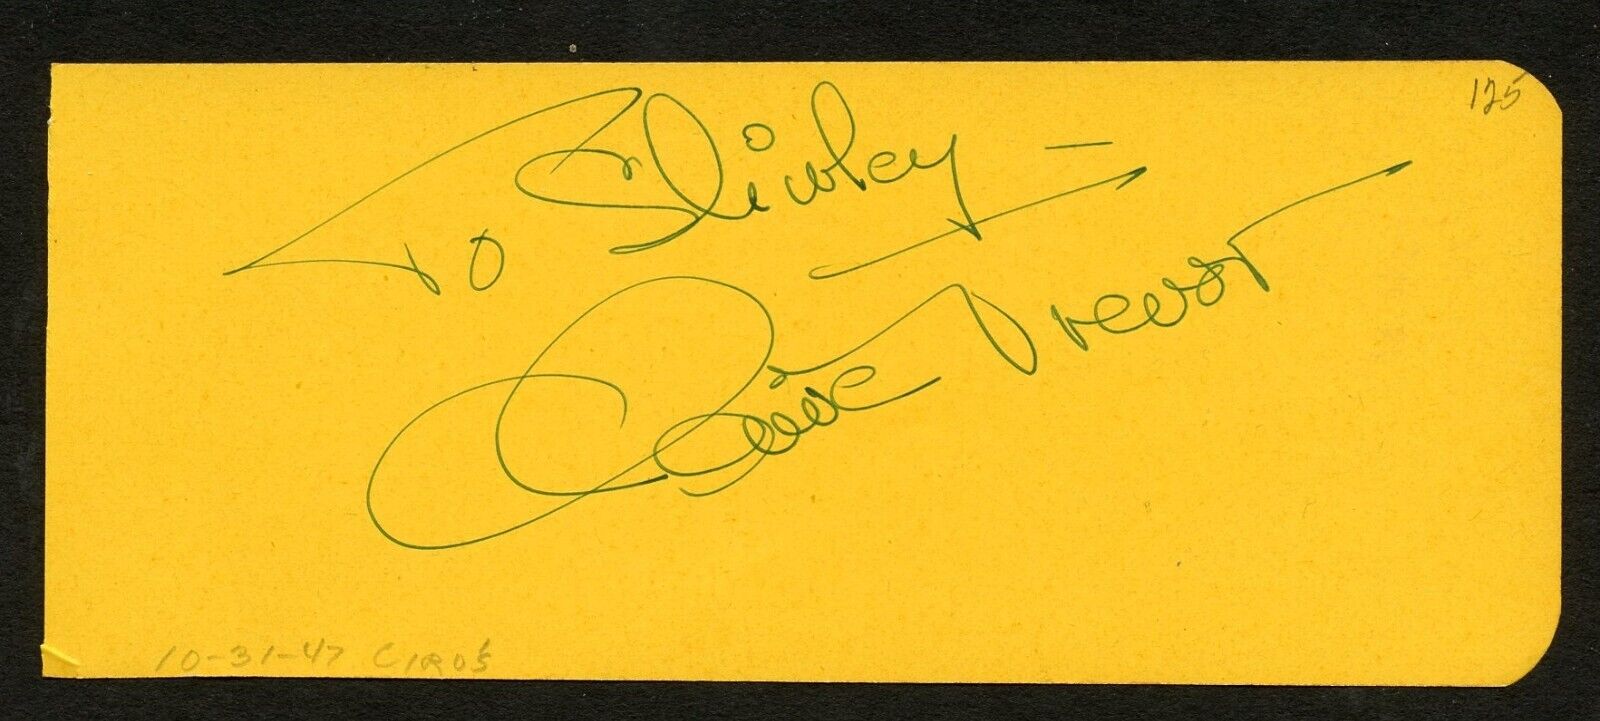 Claire Trevor d2000 signed 2x5 cut autograph on 10-31-47 at Ciro's Night Club LA